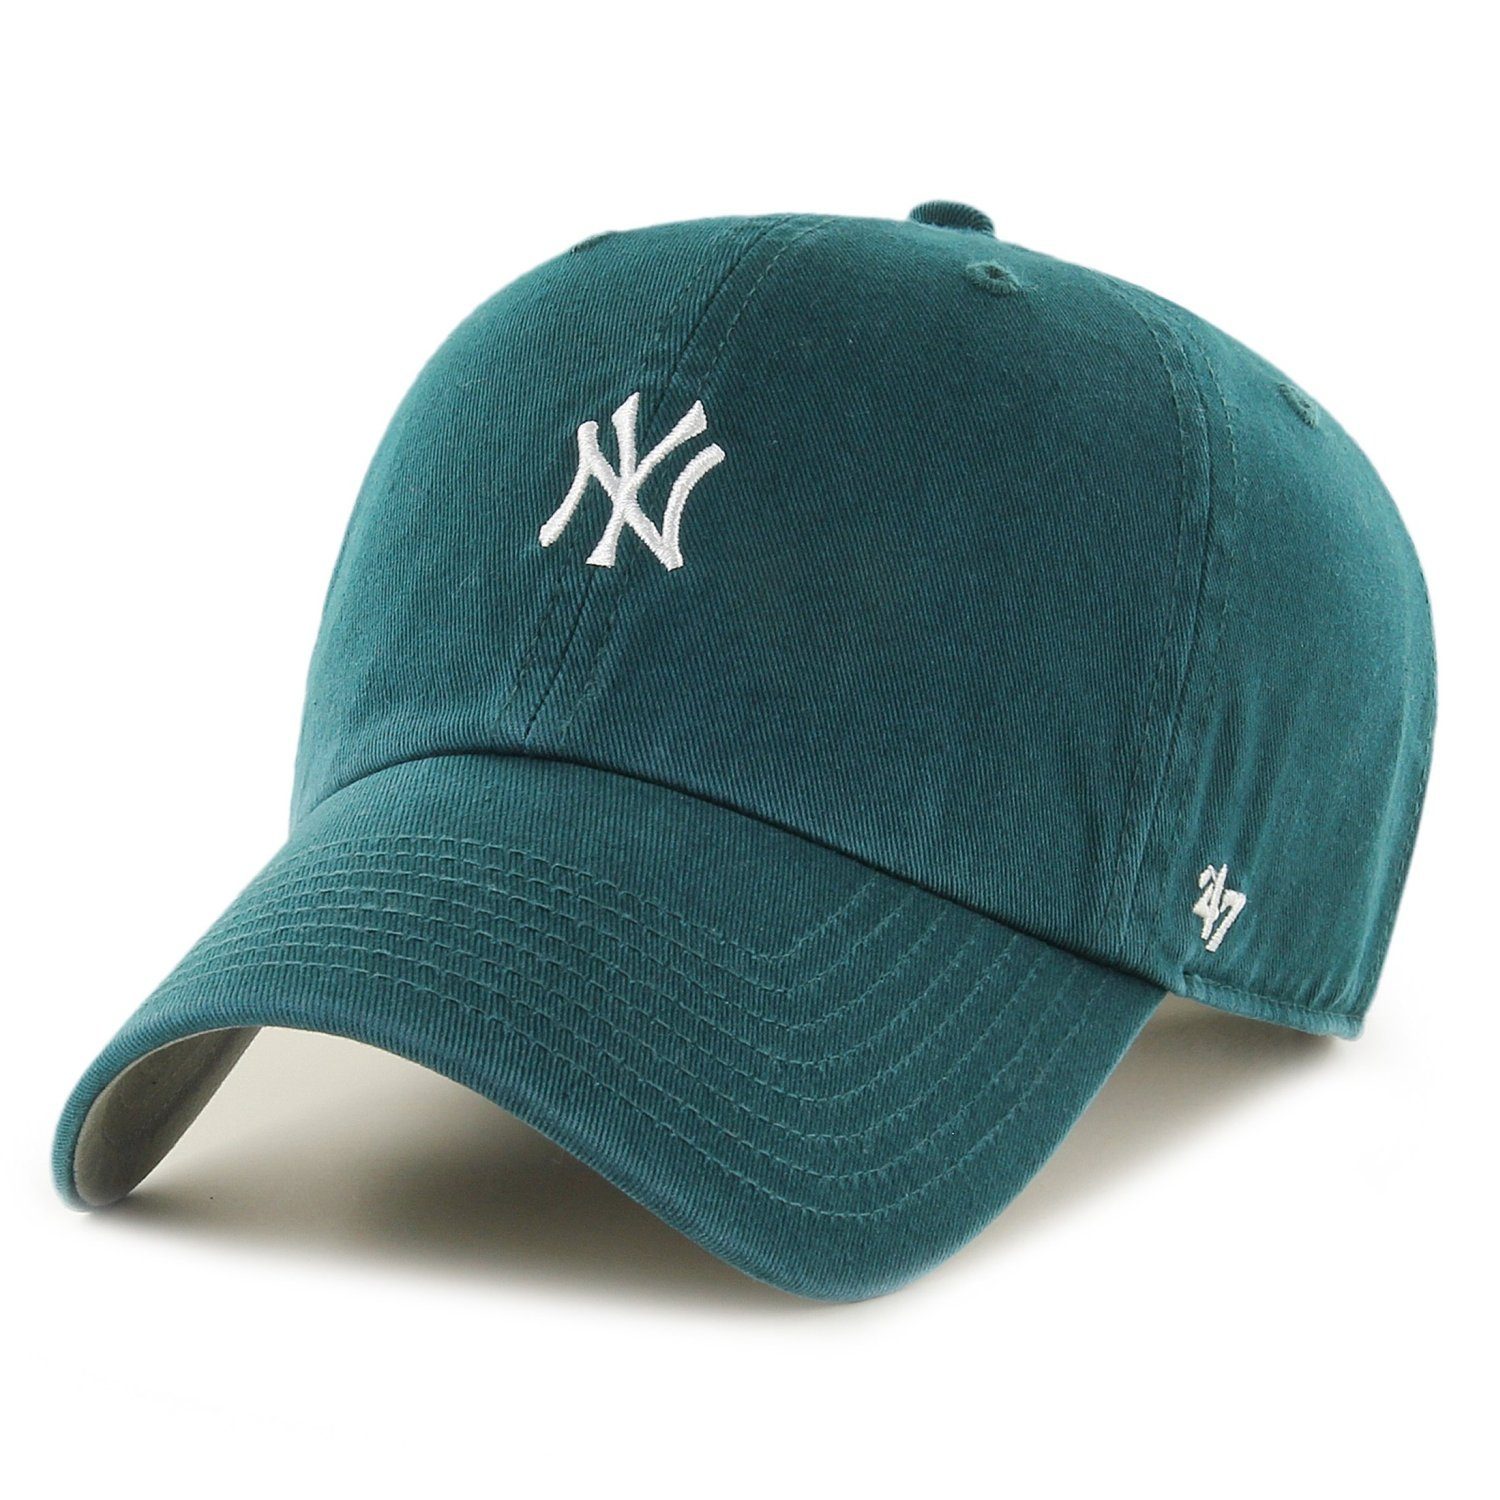 BASE '47 Yankees New Brand York Cap Baseball pacific